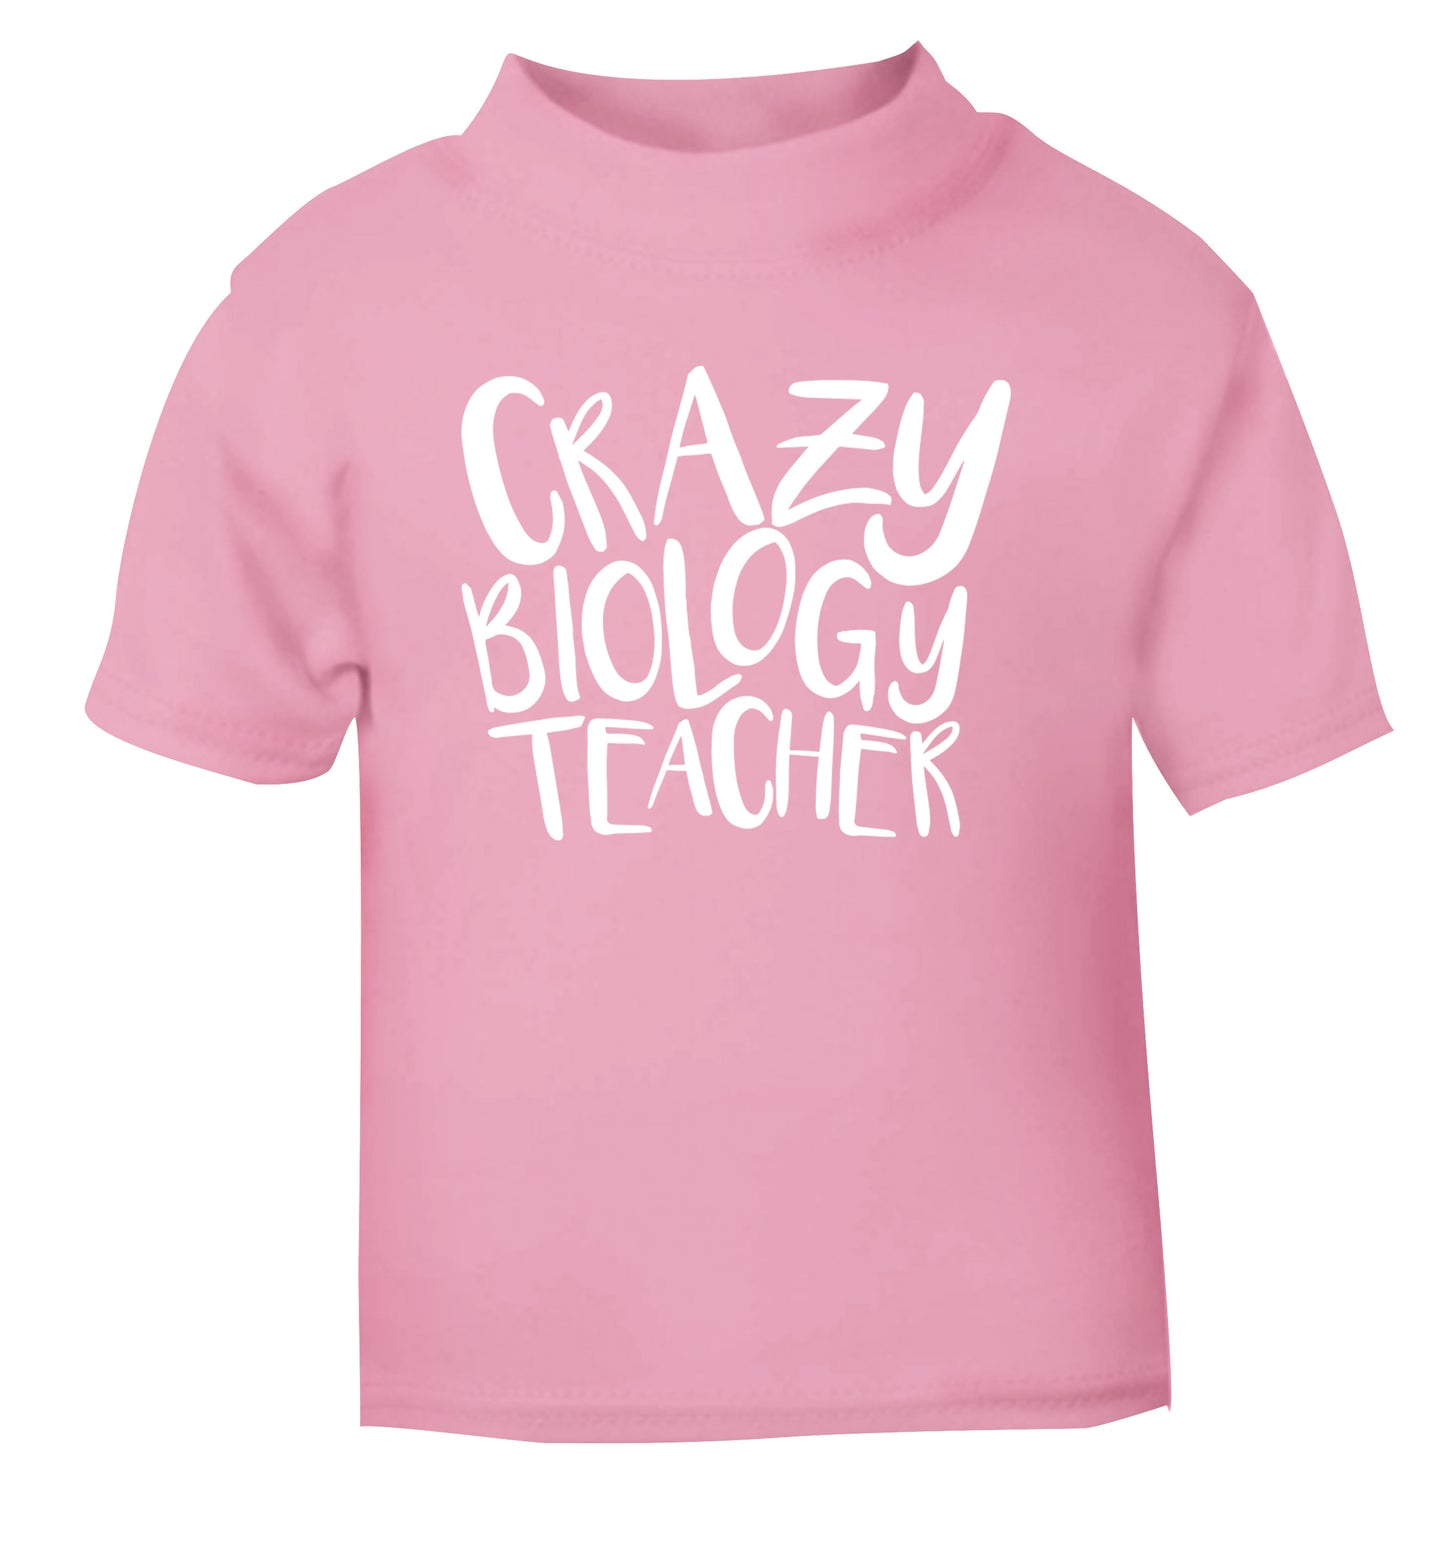 Crazy biology teacher light pink Baby Toddler Tshirt 2 Years